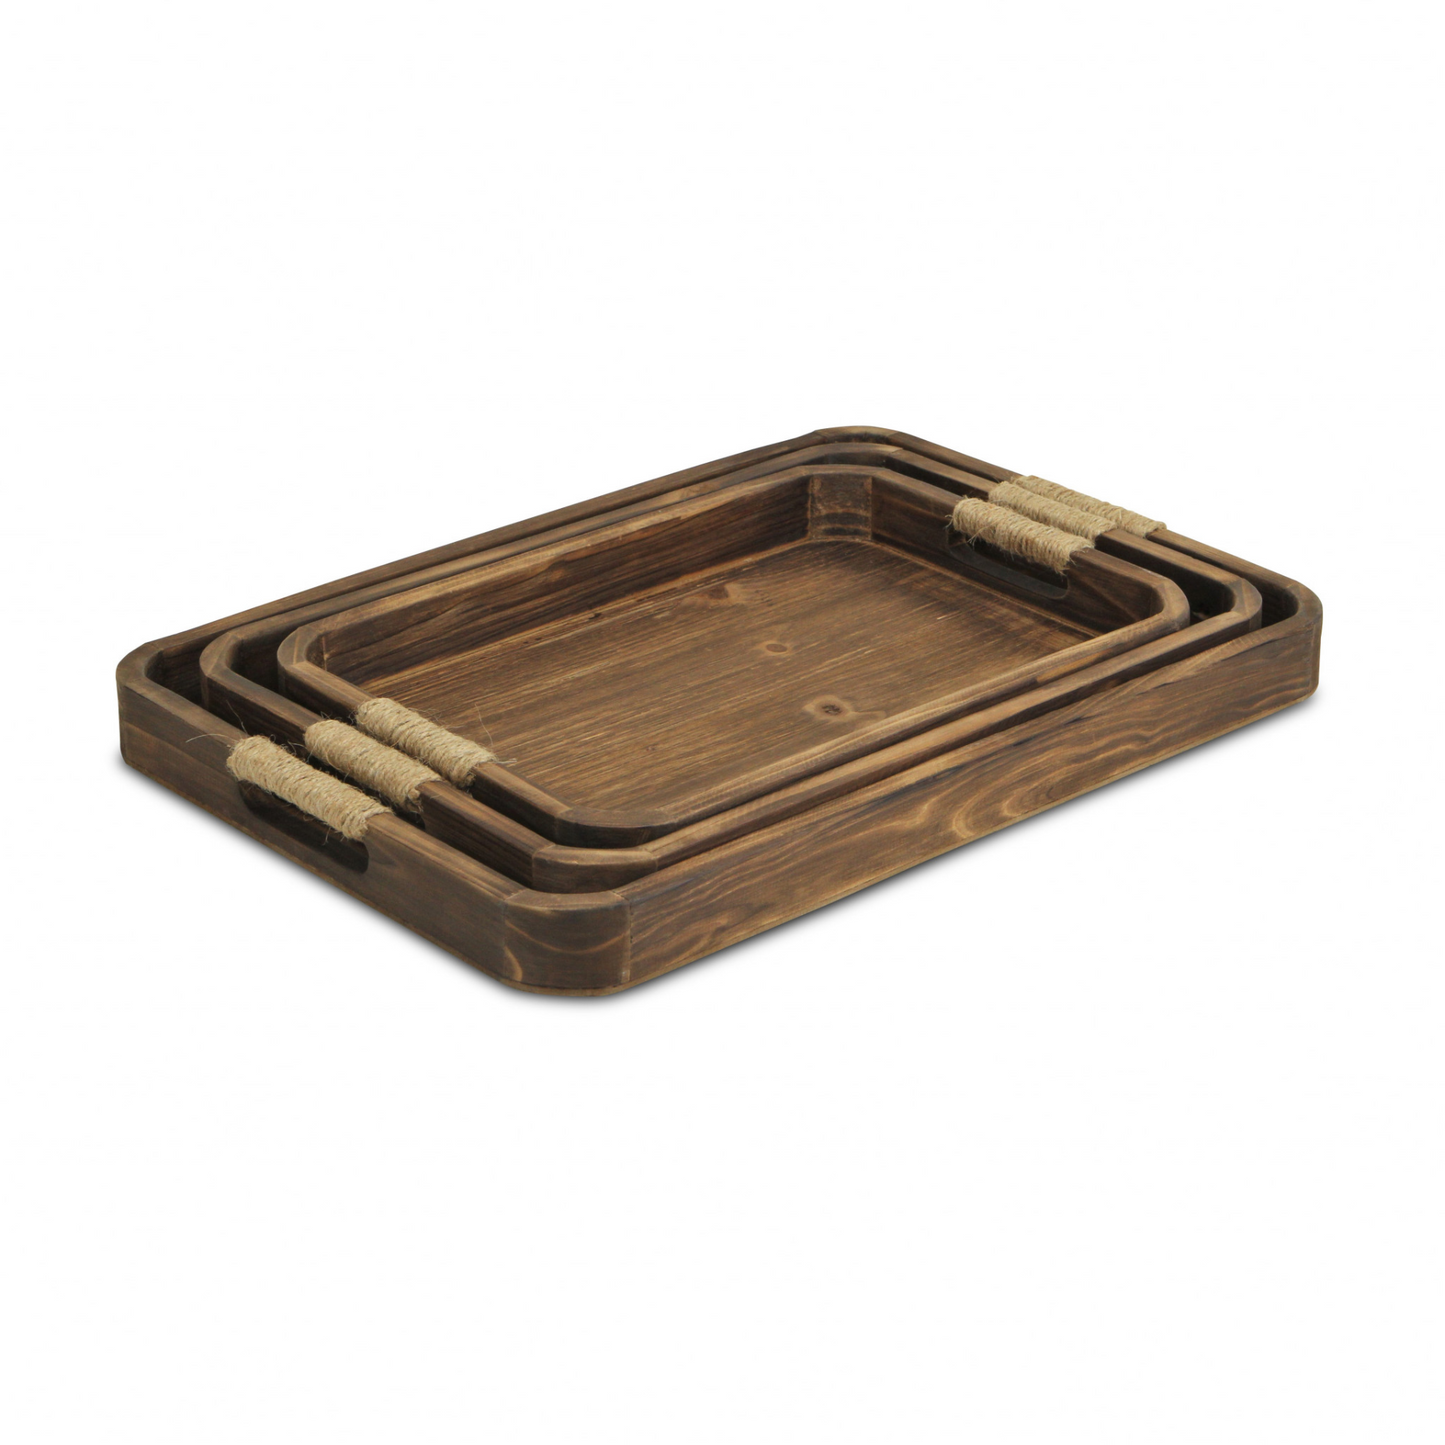 Brown Rectangular Wood Handmade Tray With Handles